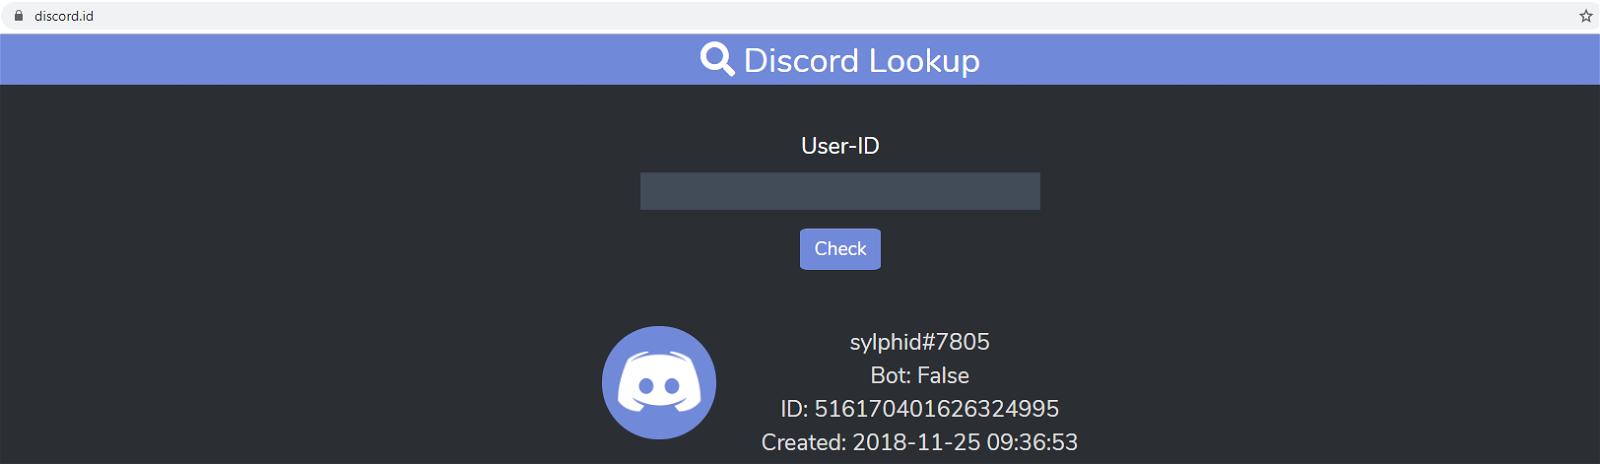 5,000+Discord members 🟢Online Verified Discord Members